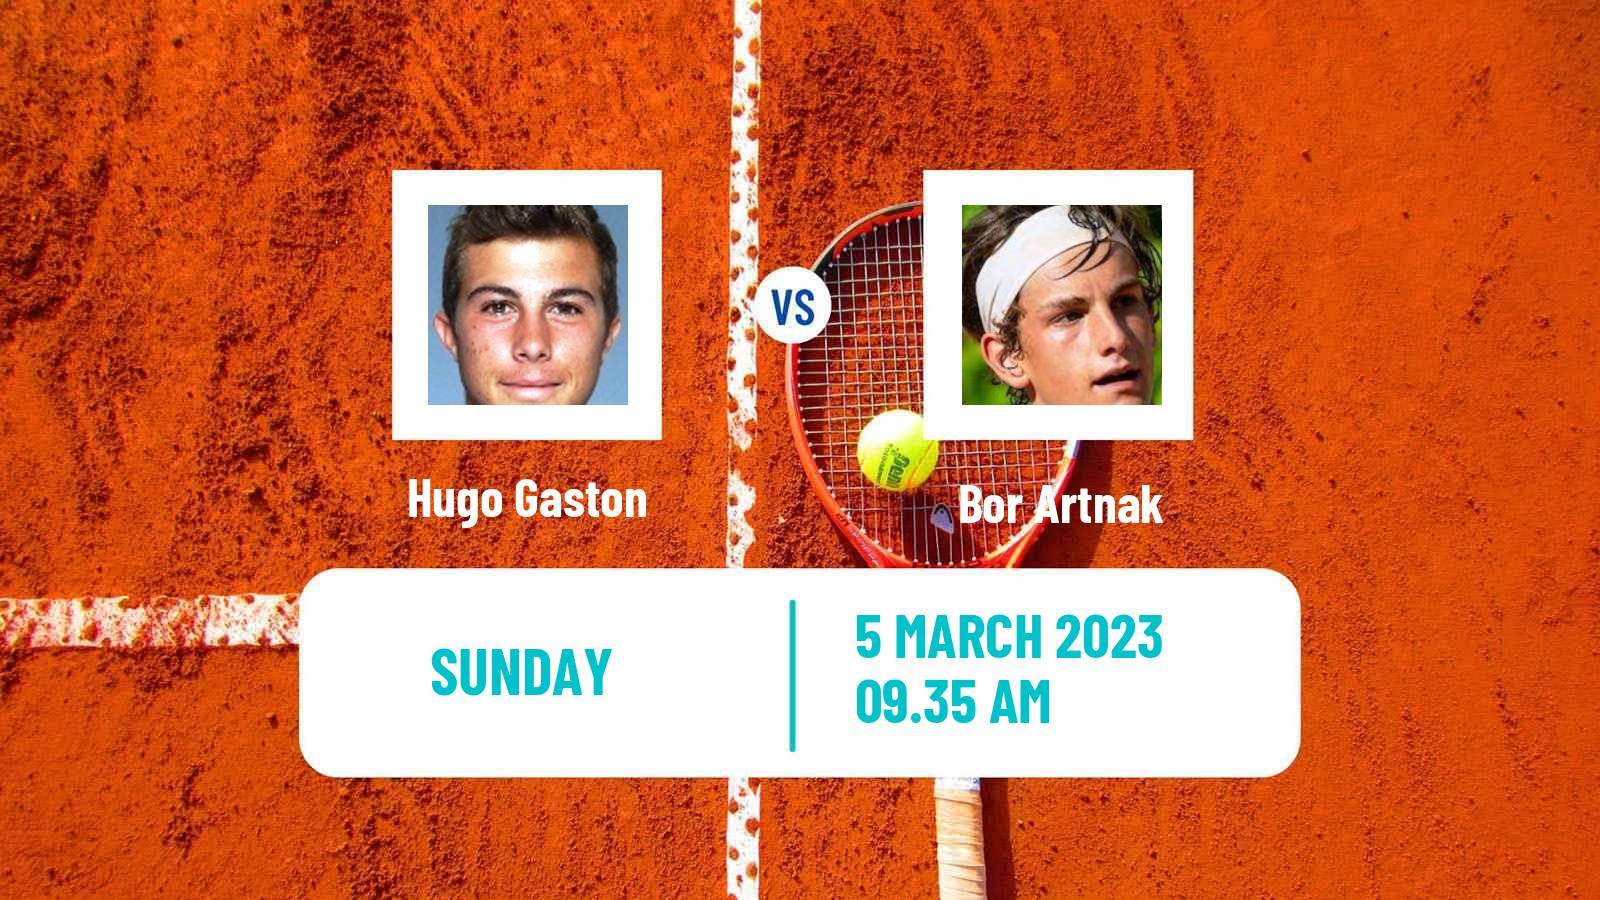 Tennis ATP Challenger Hugo Gaston - Bor Artnak